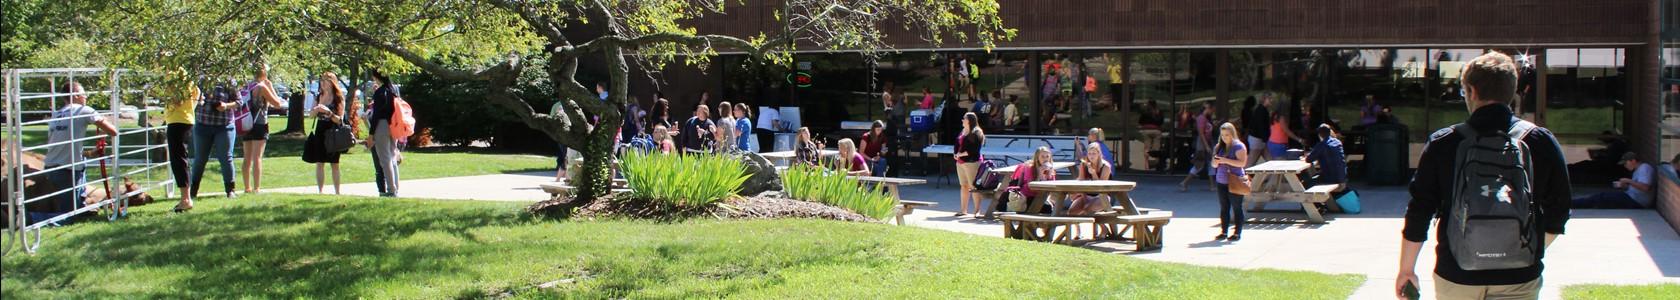 Students enjoy MCC's Sidney campus picnic area